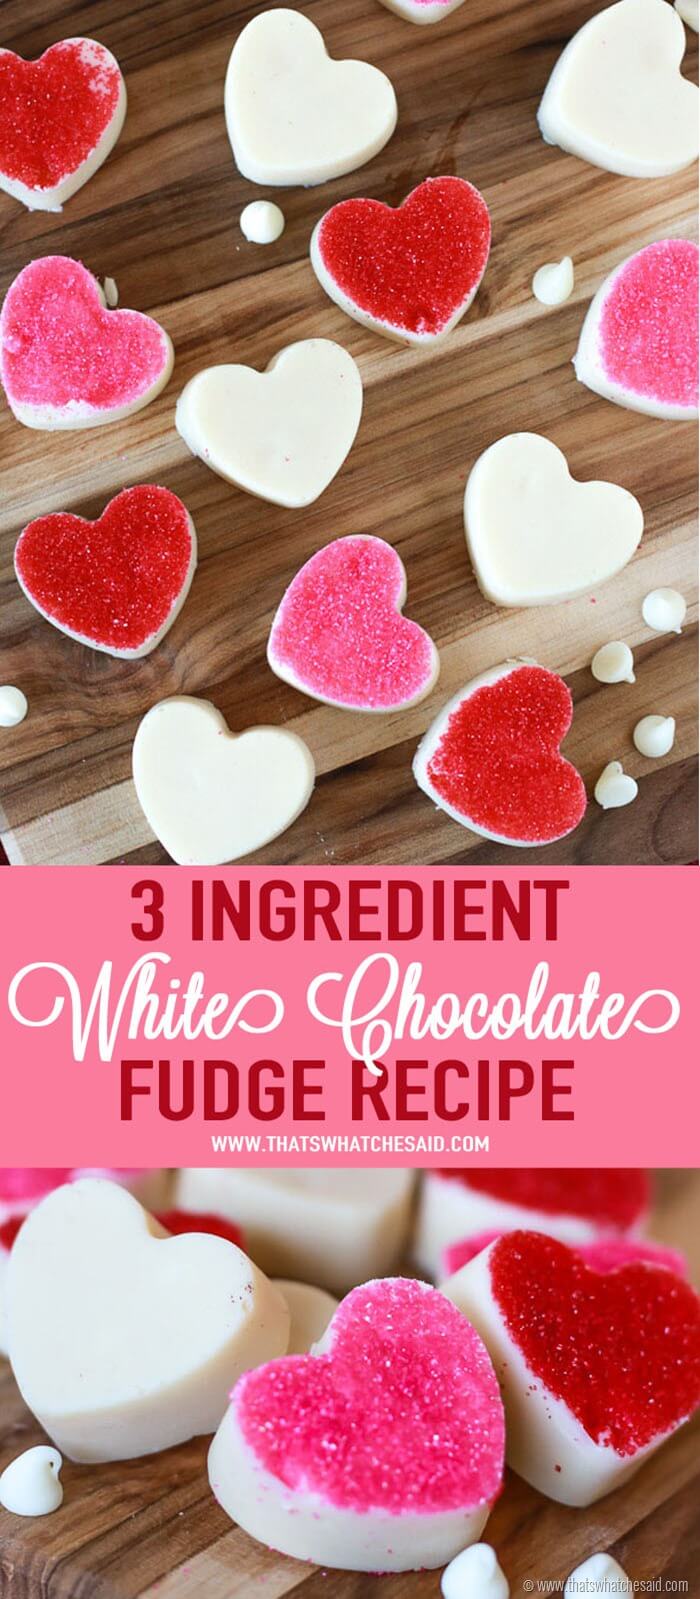 3 Ingredient White Chocolate Fudge Recipe at www.thatswhatchesaid.com